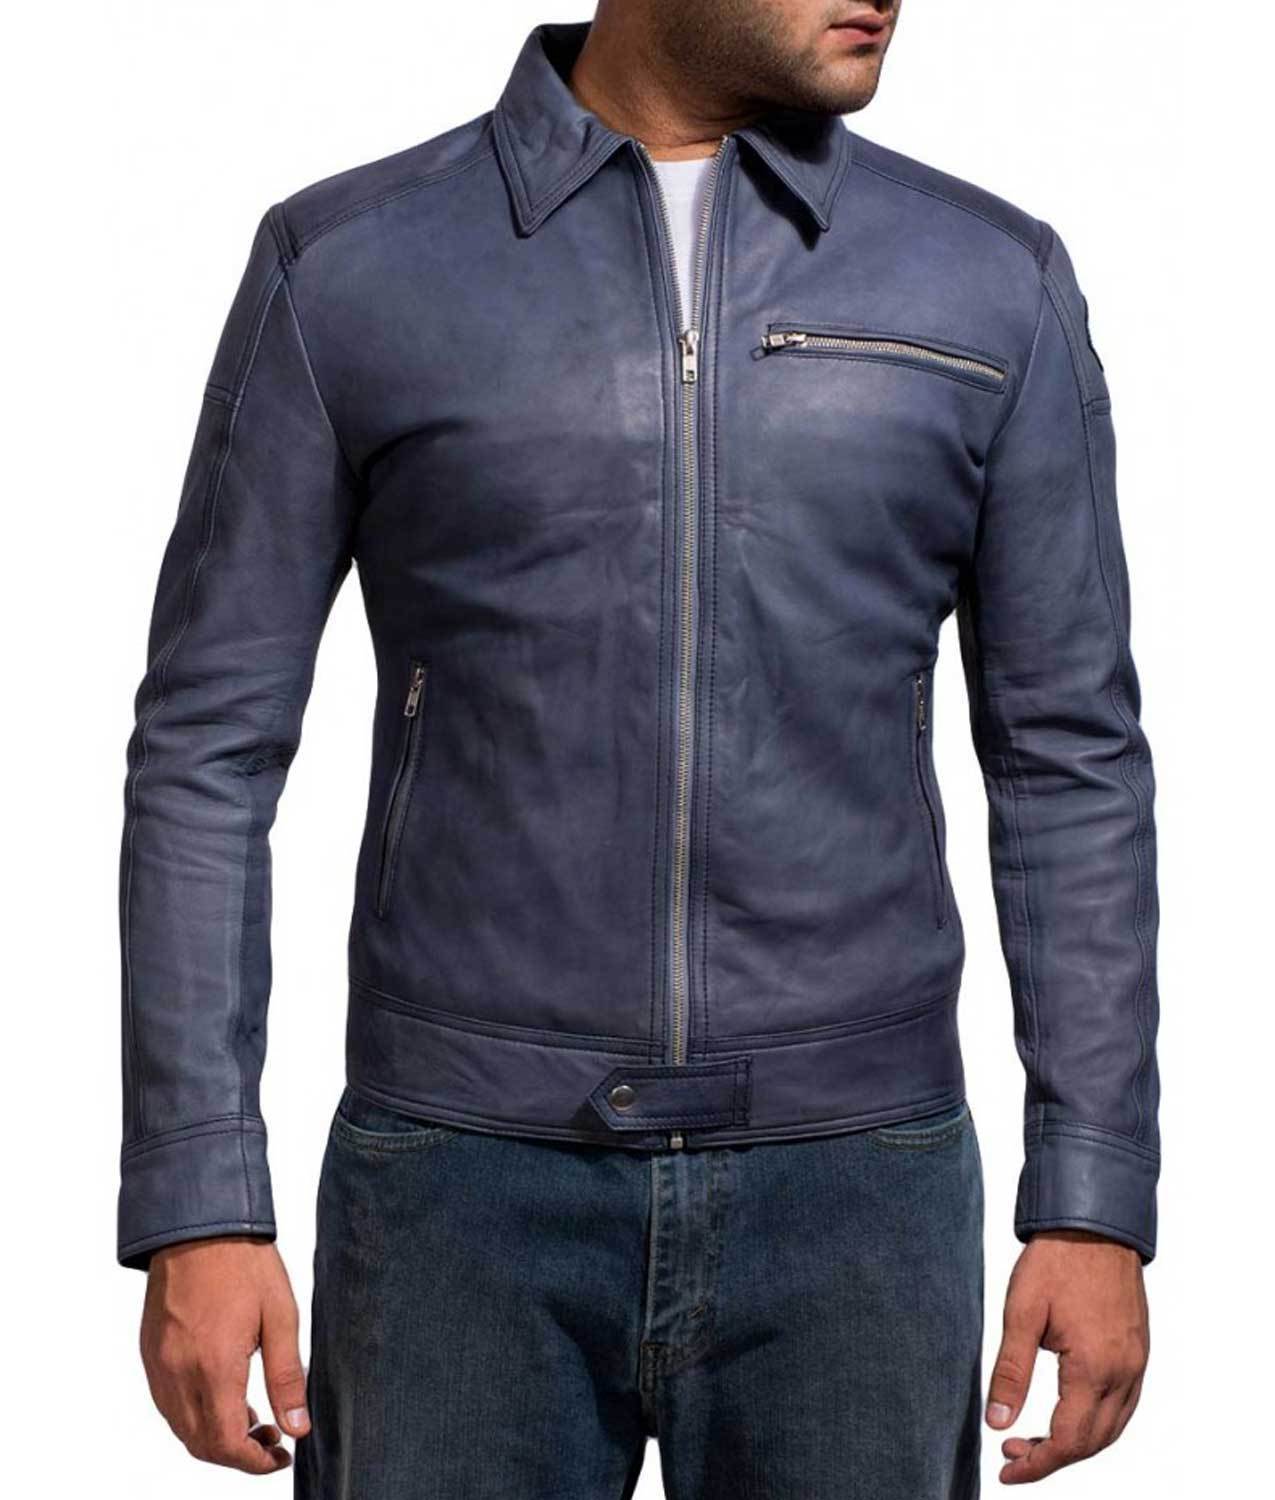 Tobey Marshall Need For Speed Aaron Paul Blue Leather Jacket